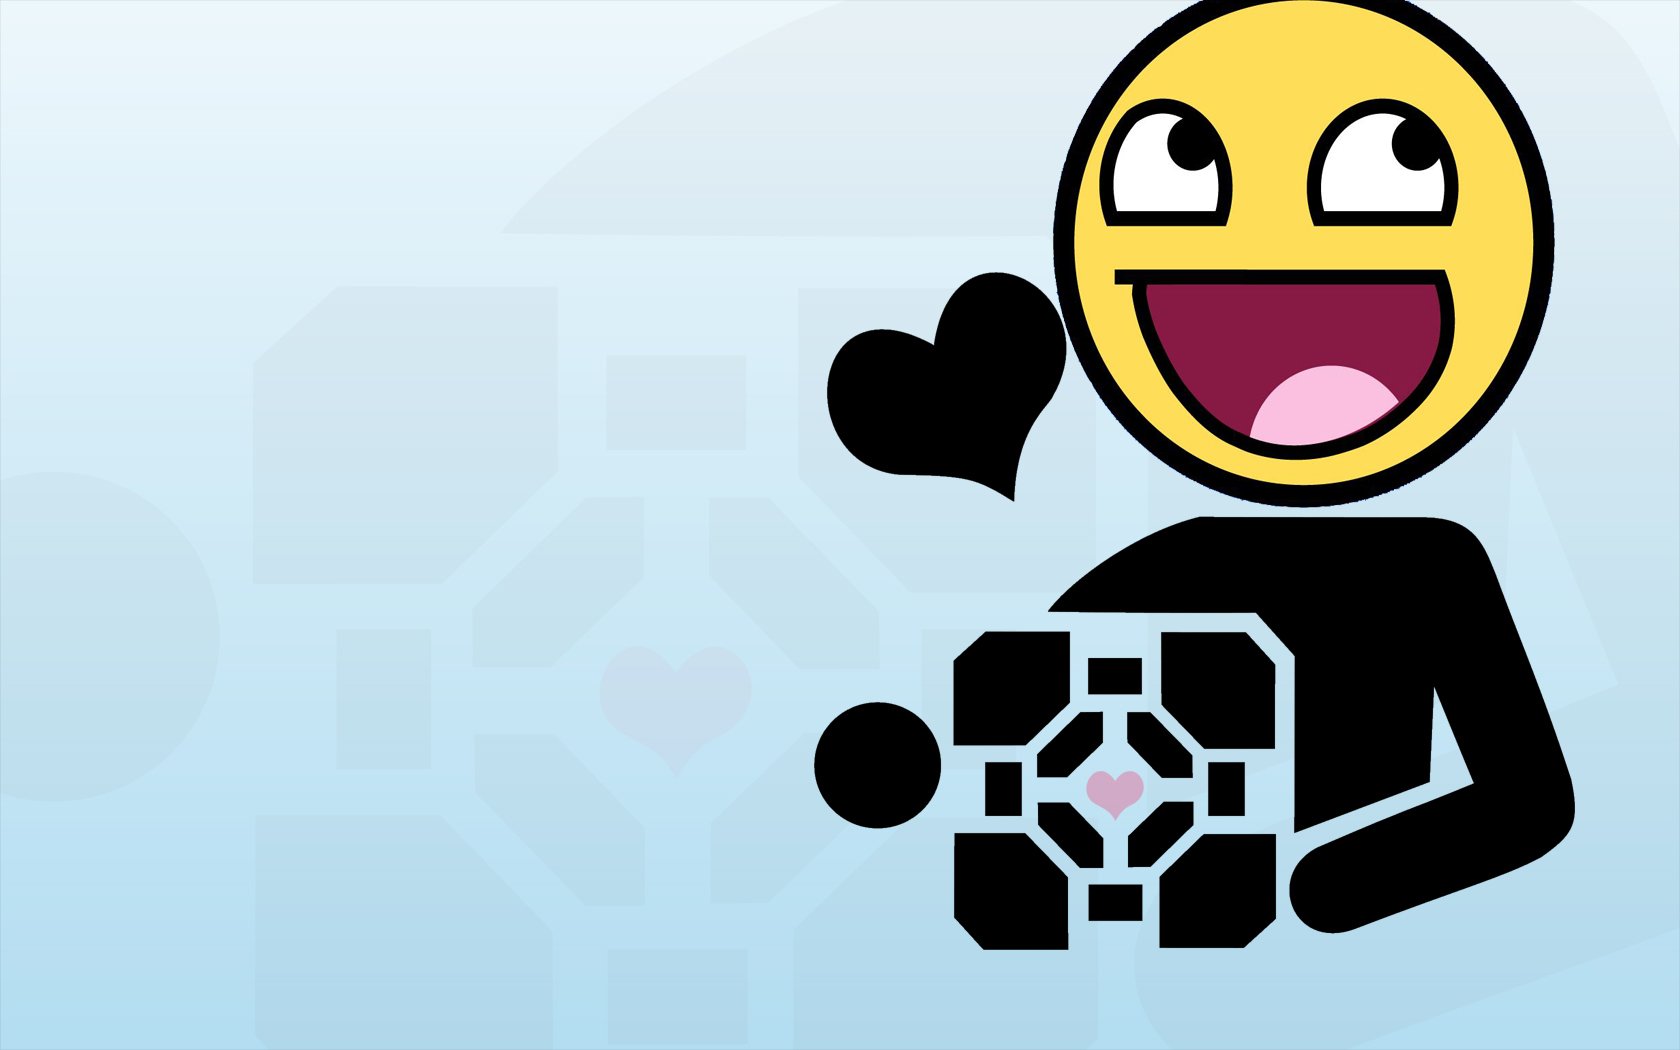 Portal Funny Panion Cube Meme Aperture Laboratories Awesome Face